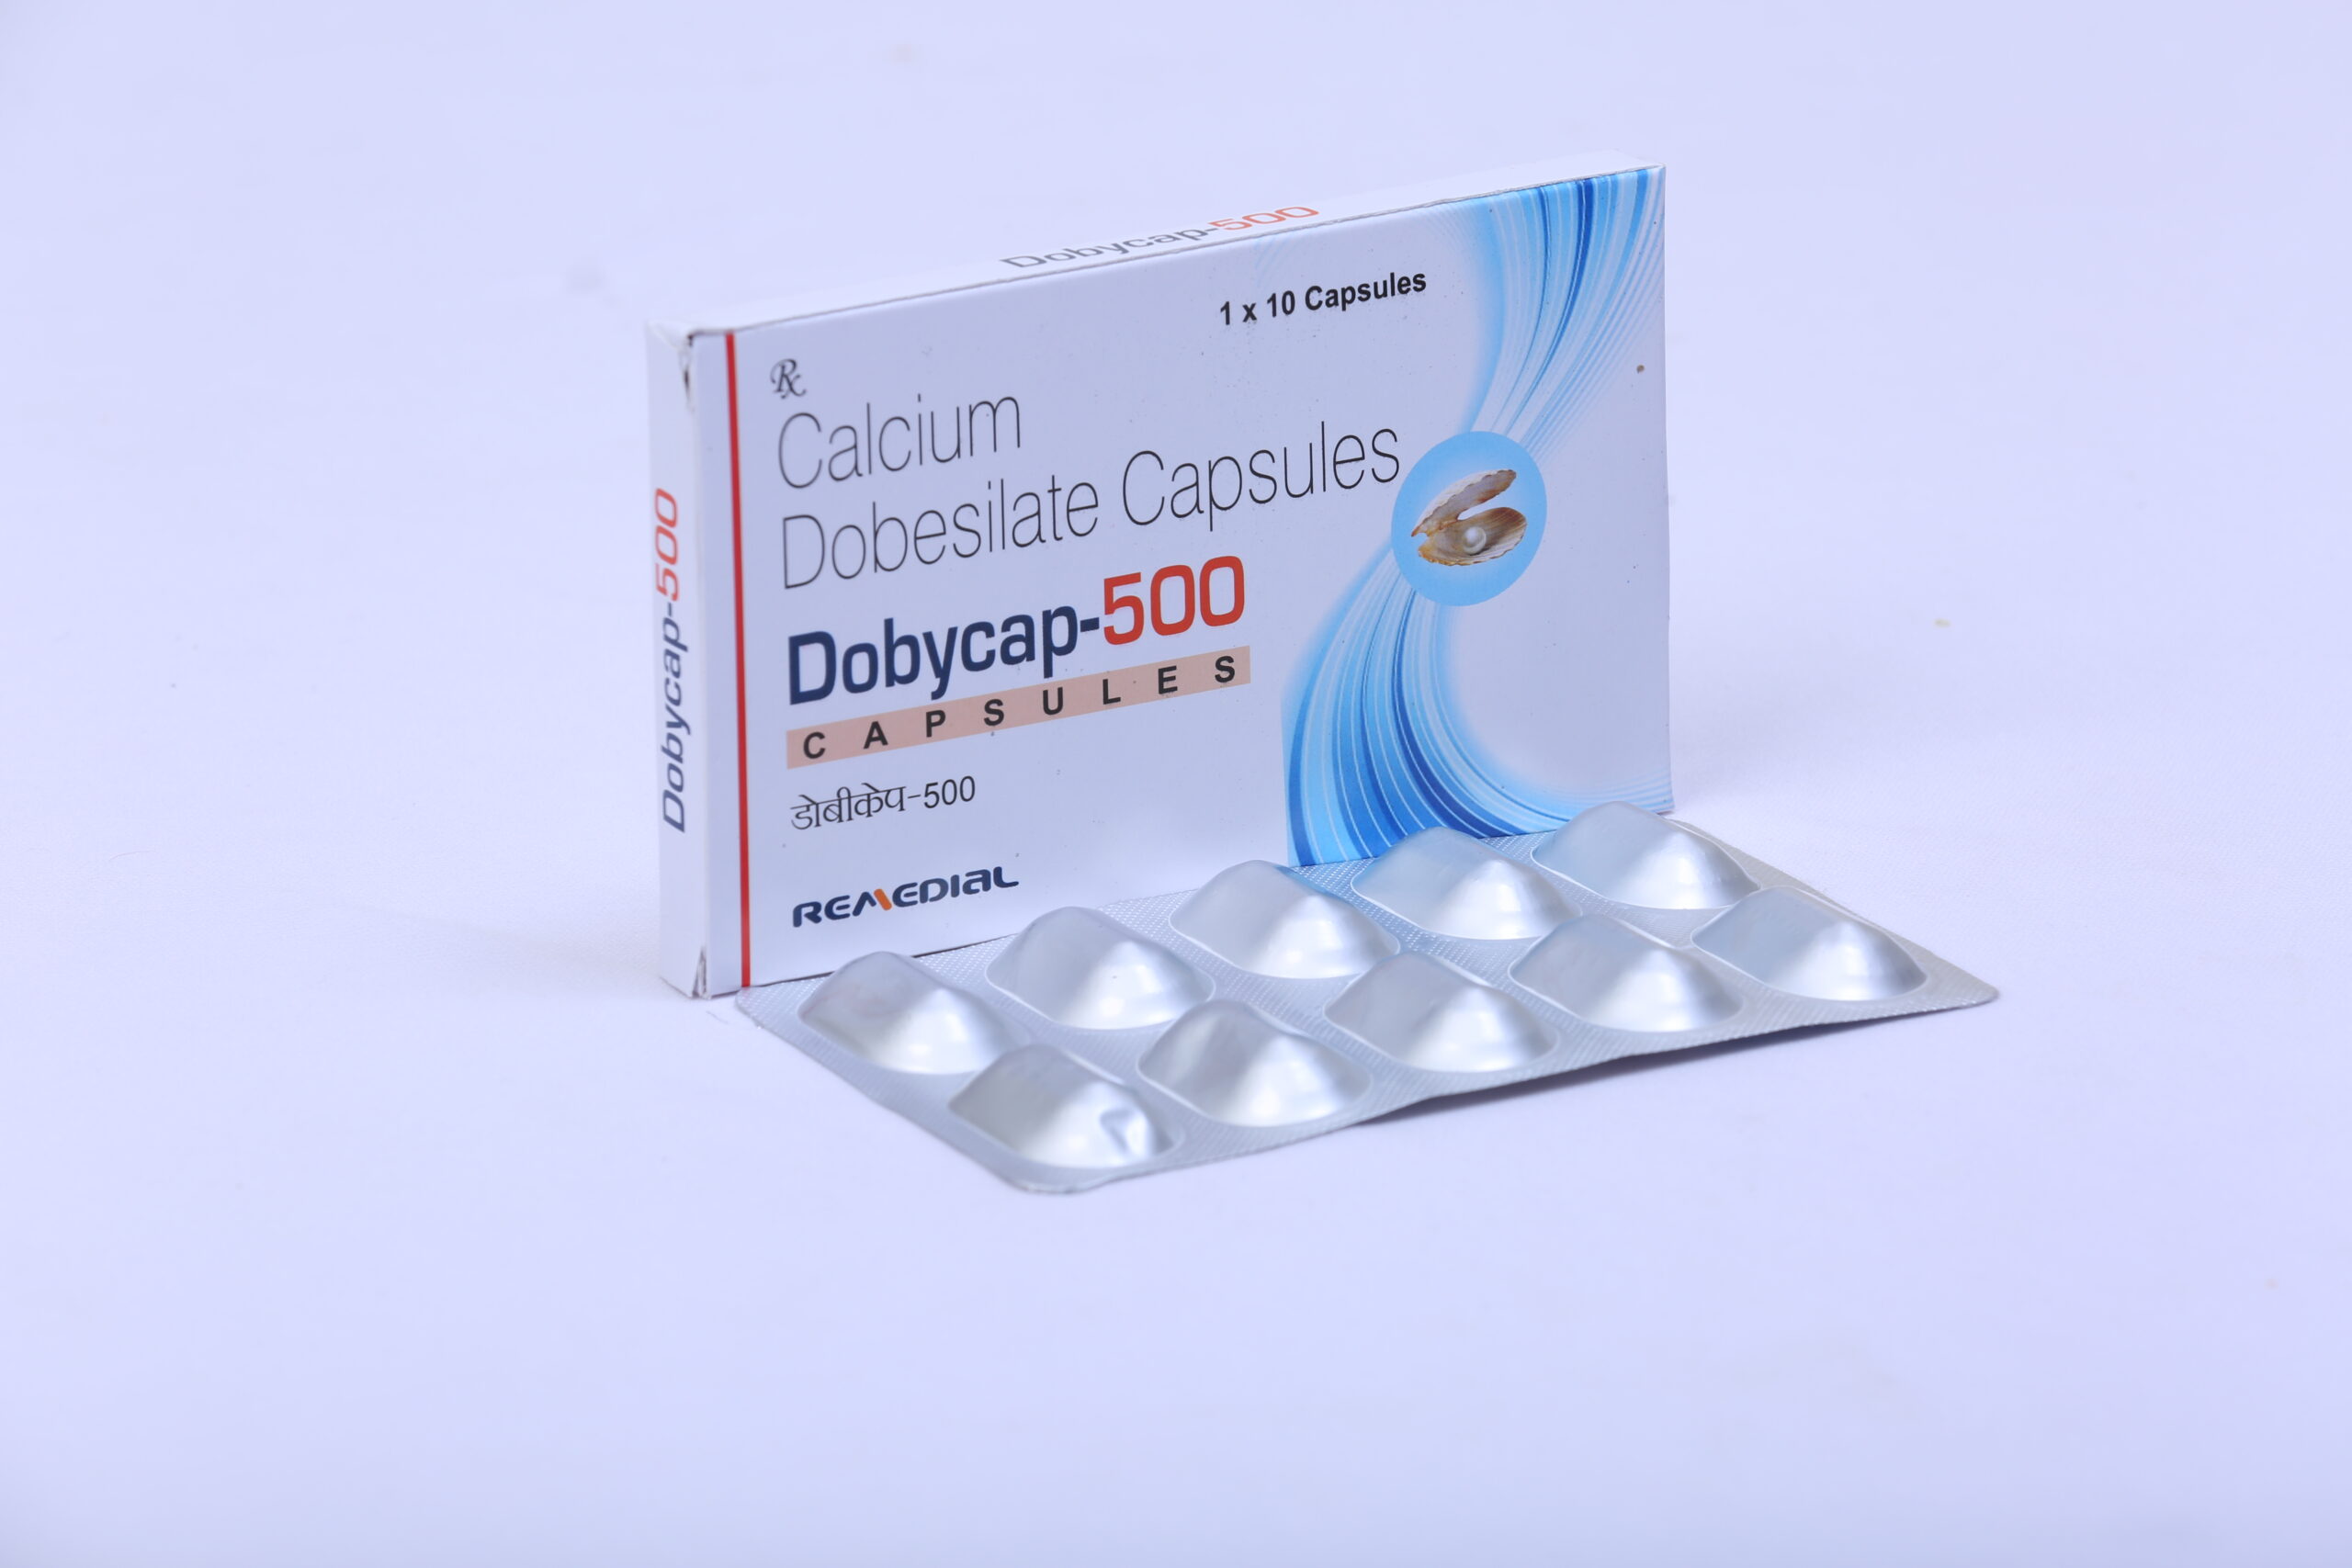 DOBYCAP-500 (Calcium Dobesylate 500mg)